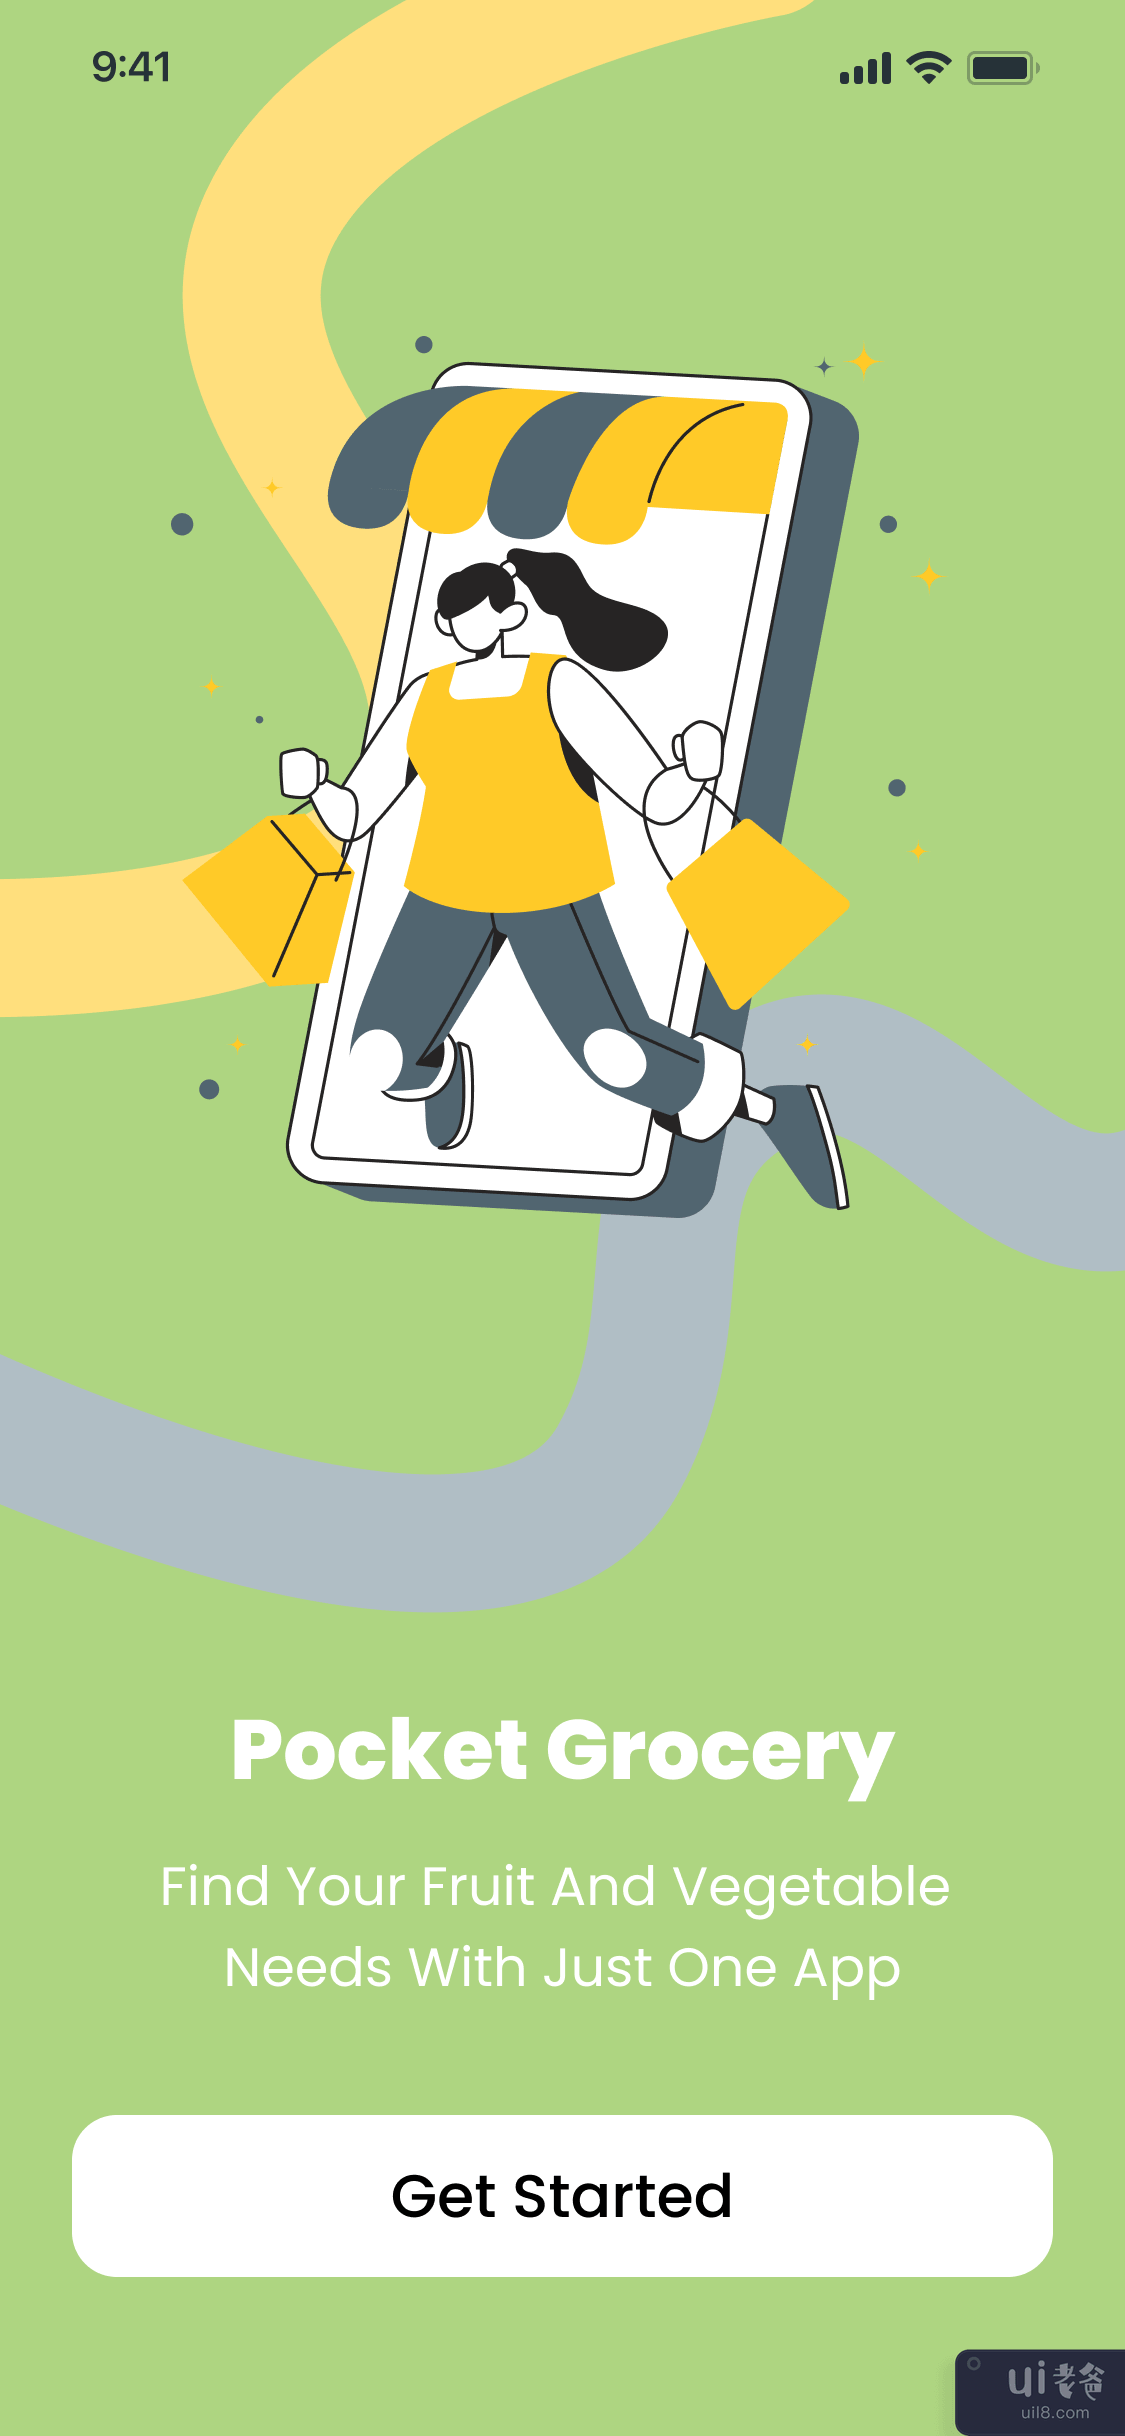 Pocket Grocery - 食品杂货应用程序(Pocket Grocery - Food Grocery App)插图2